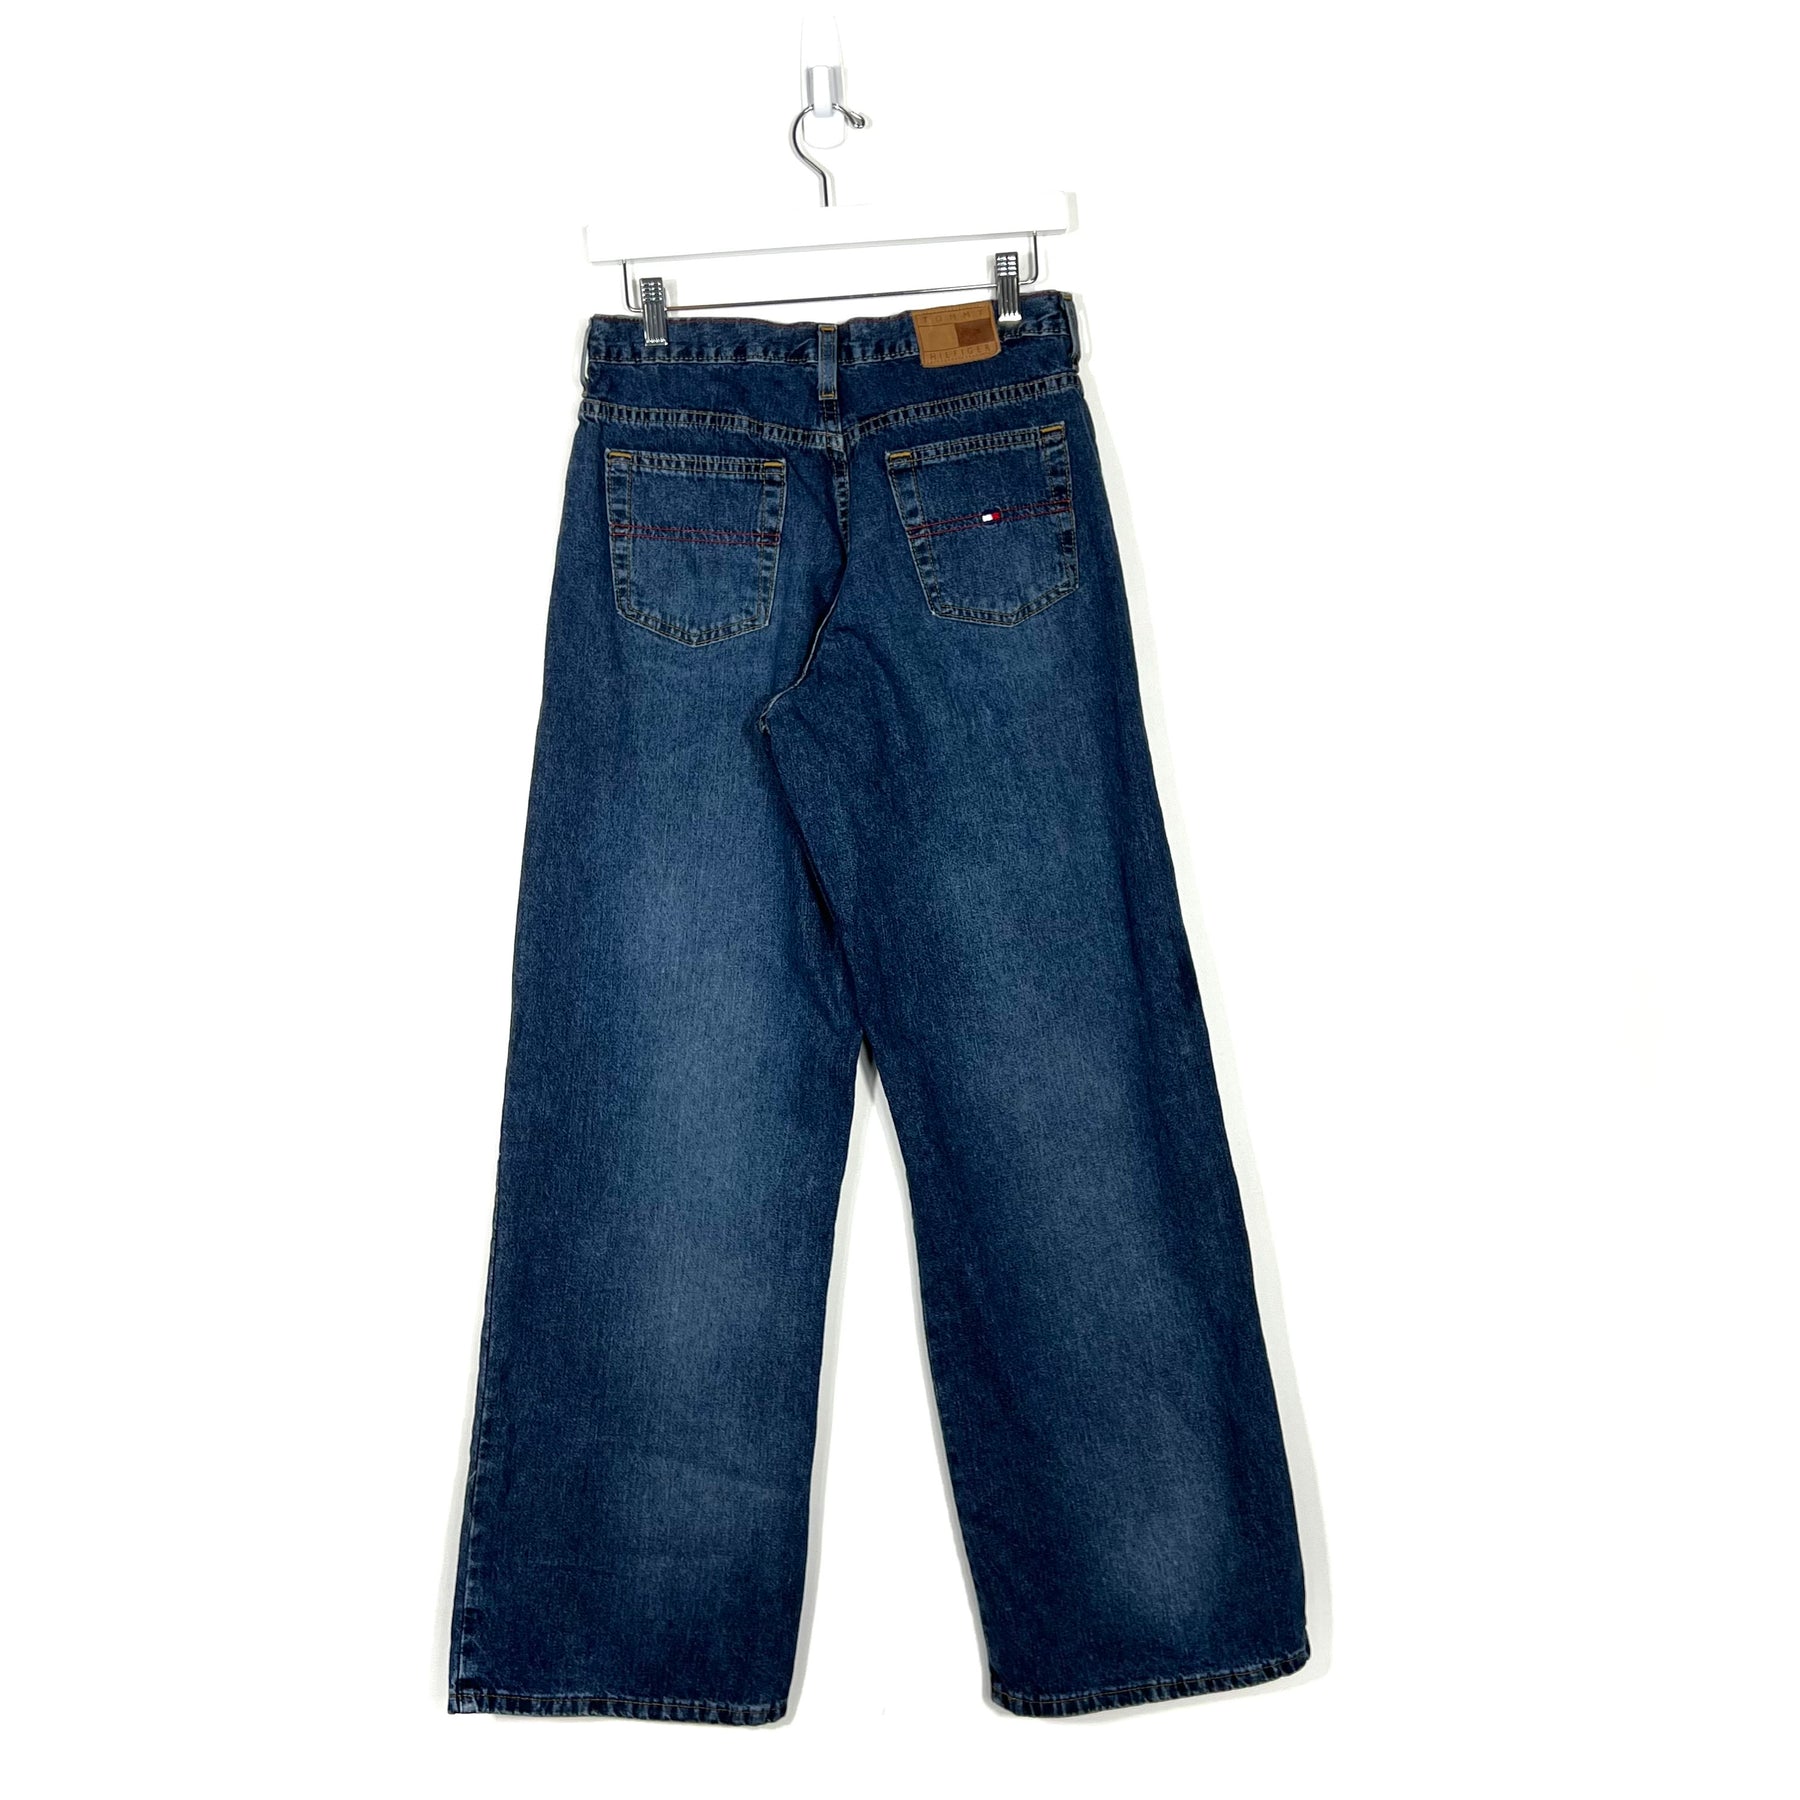 Vintage Tommy Hilfiger Jeans - Women's 30/32